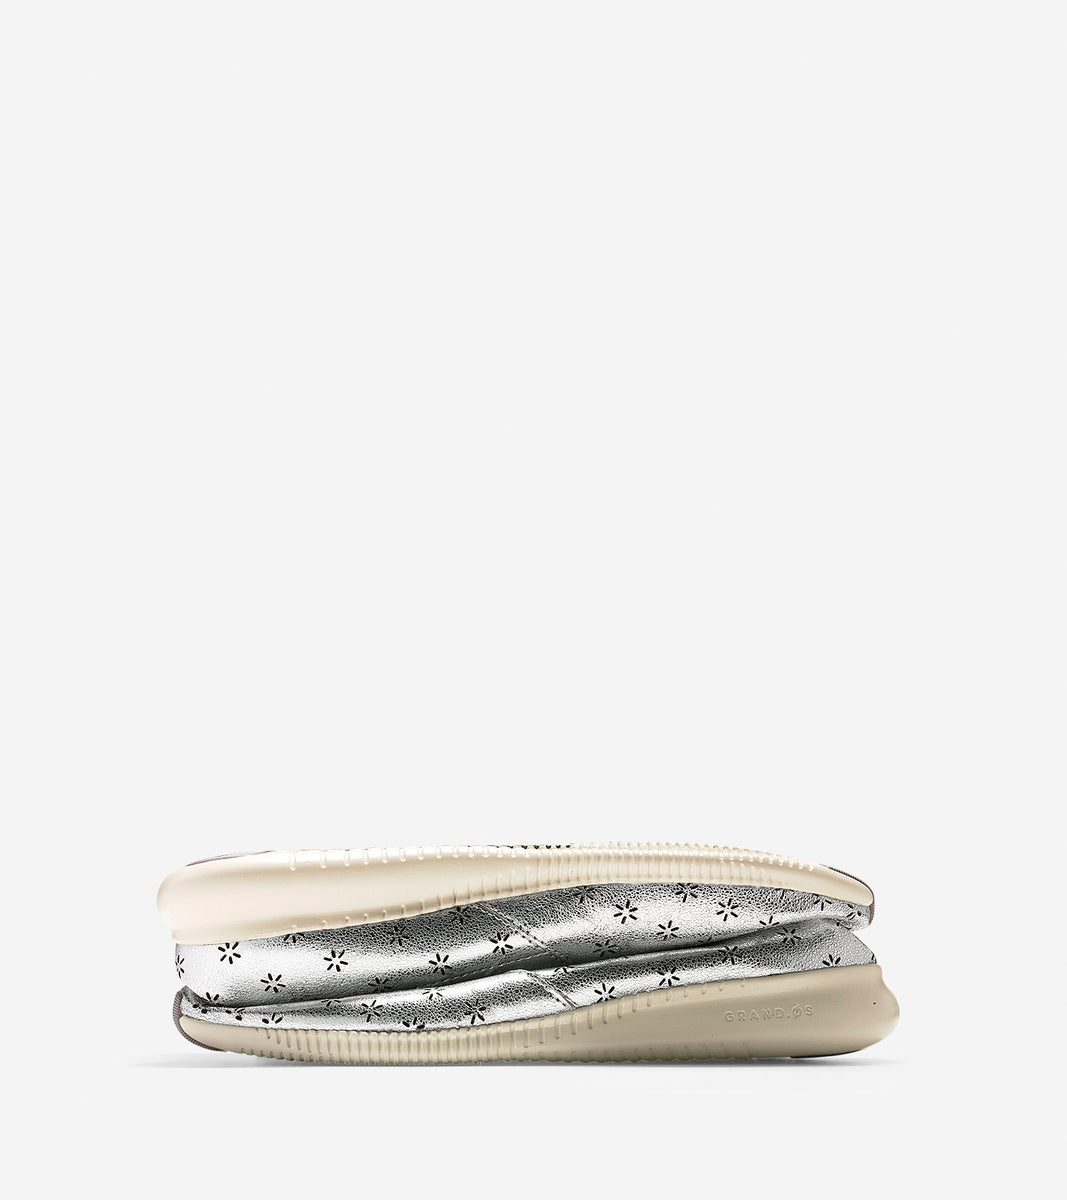 ColeHaan-StudiøGrand Perforated Slip-On Sneaker-w10396-Silver Metallic Perforated-fog